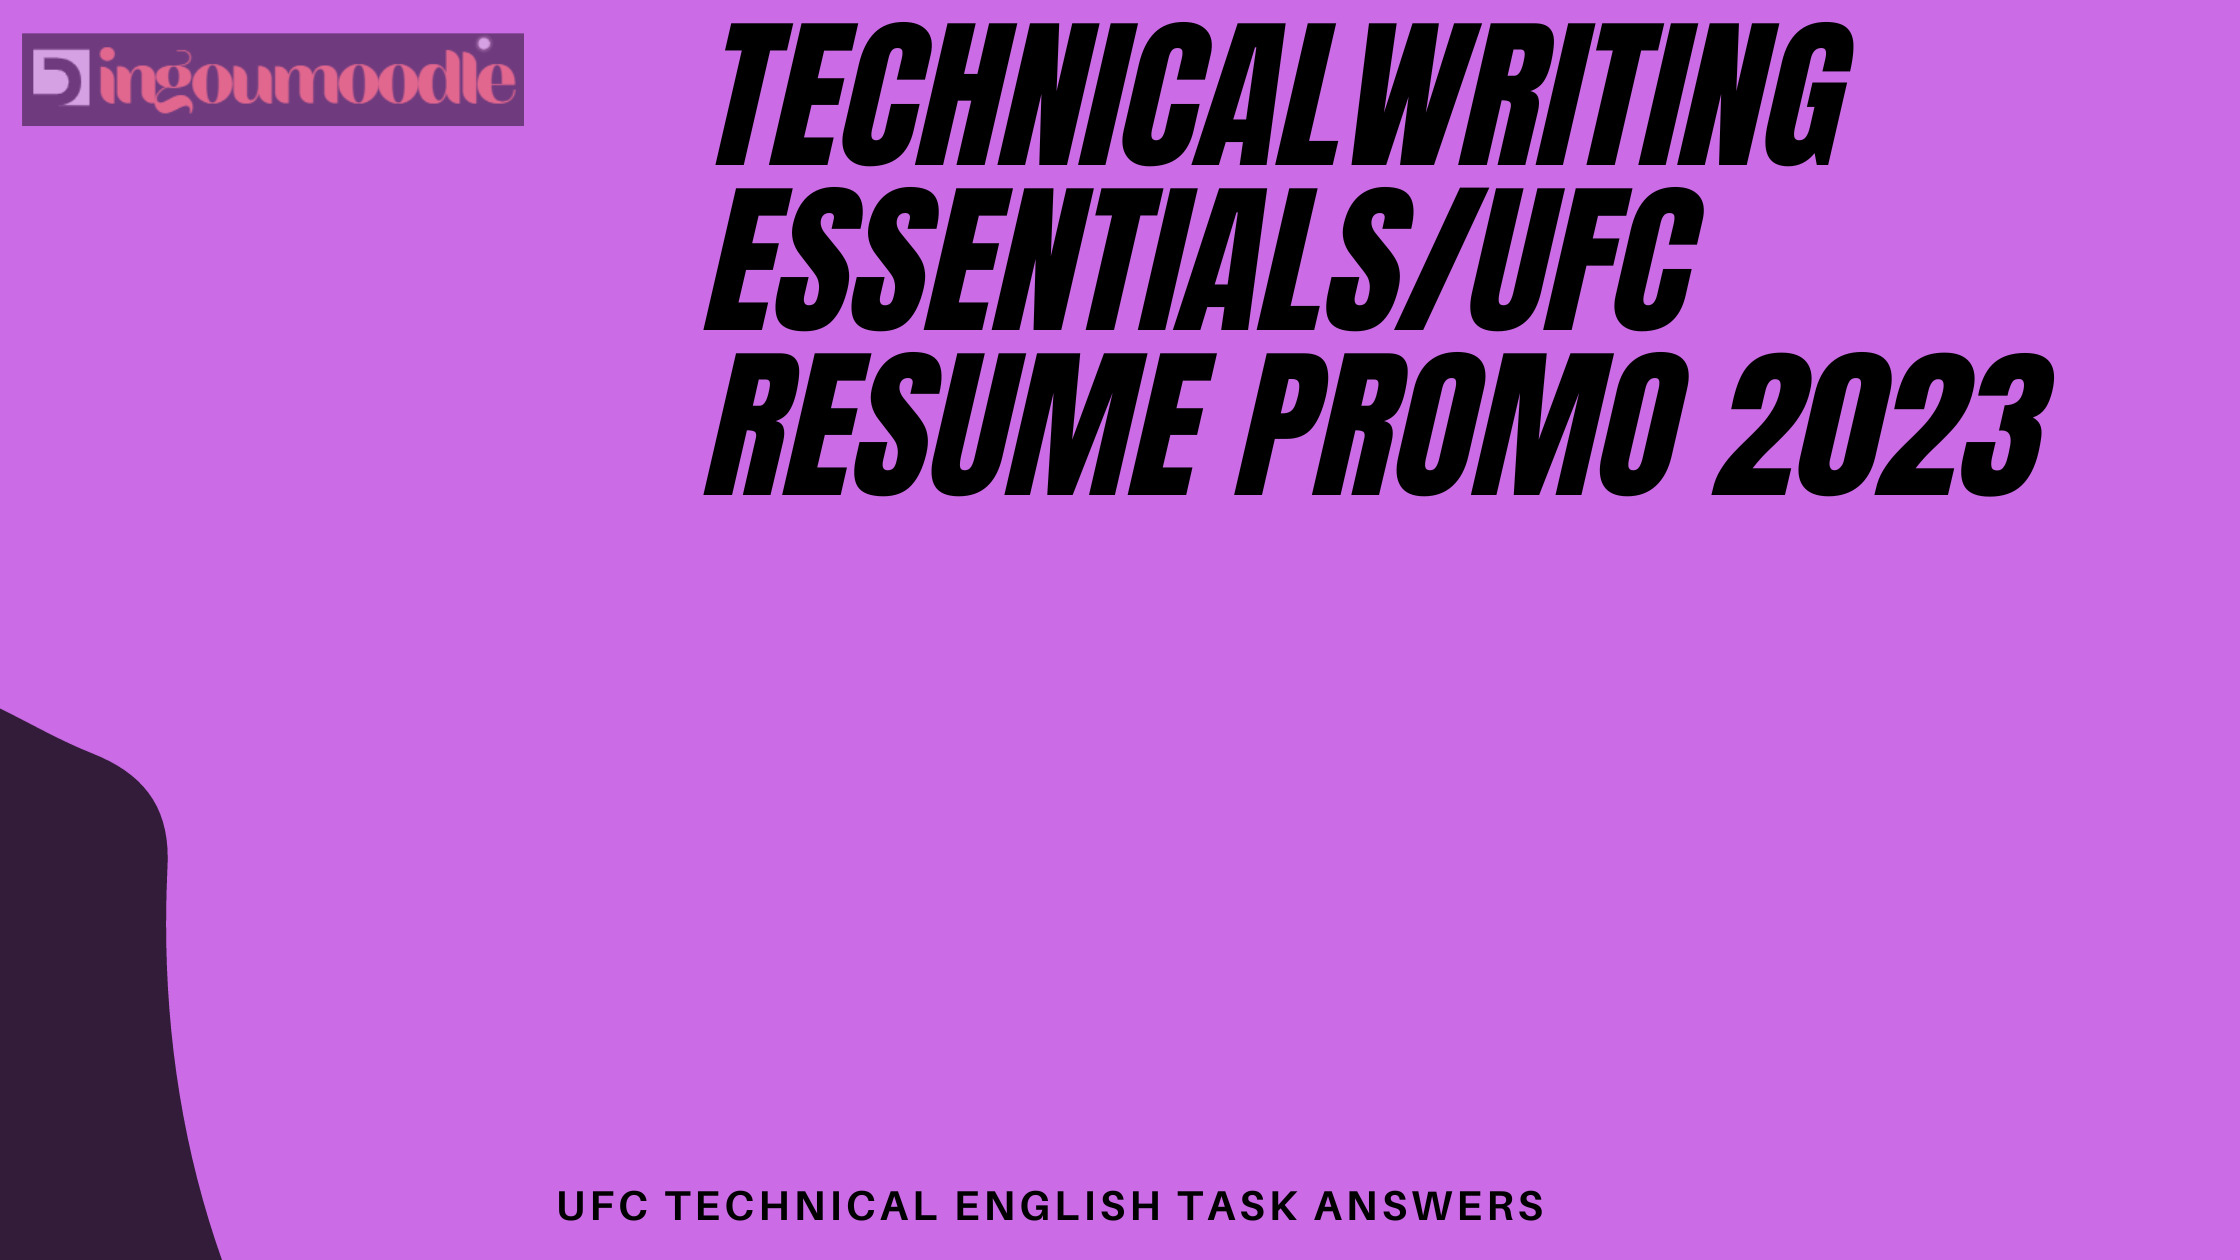 Technical Writing part one Essentials/UFC RESUME Promo 2023